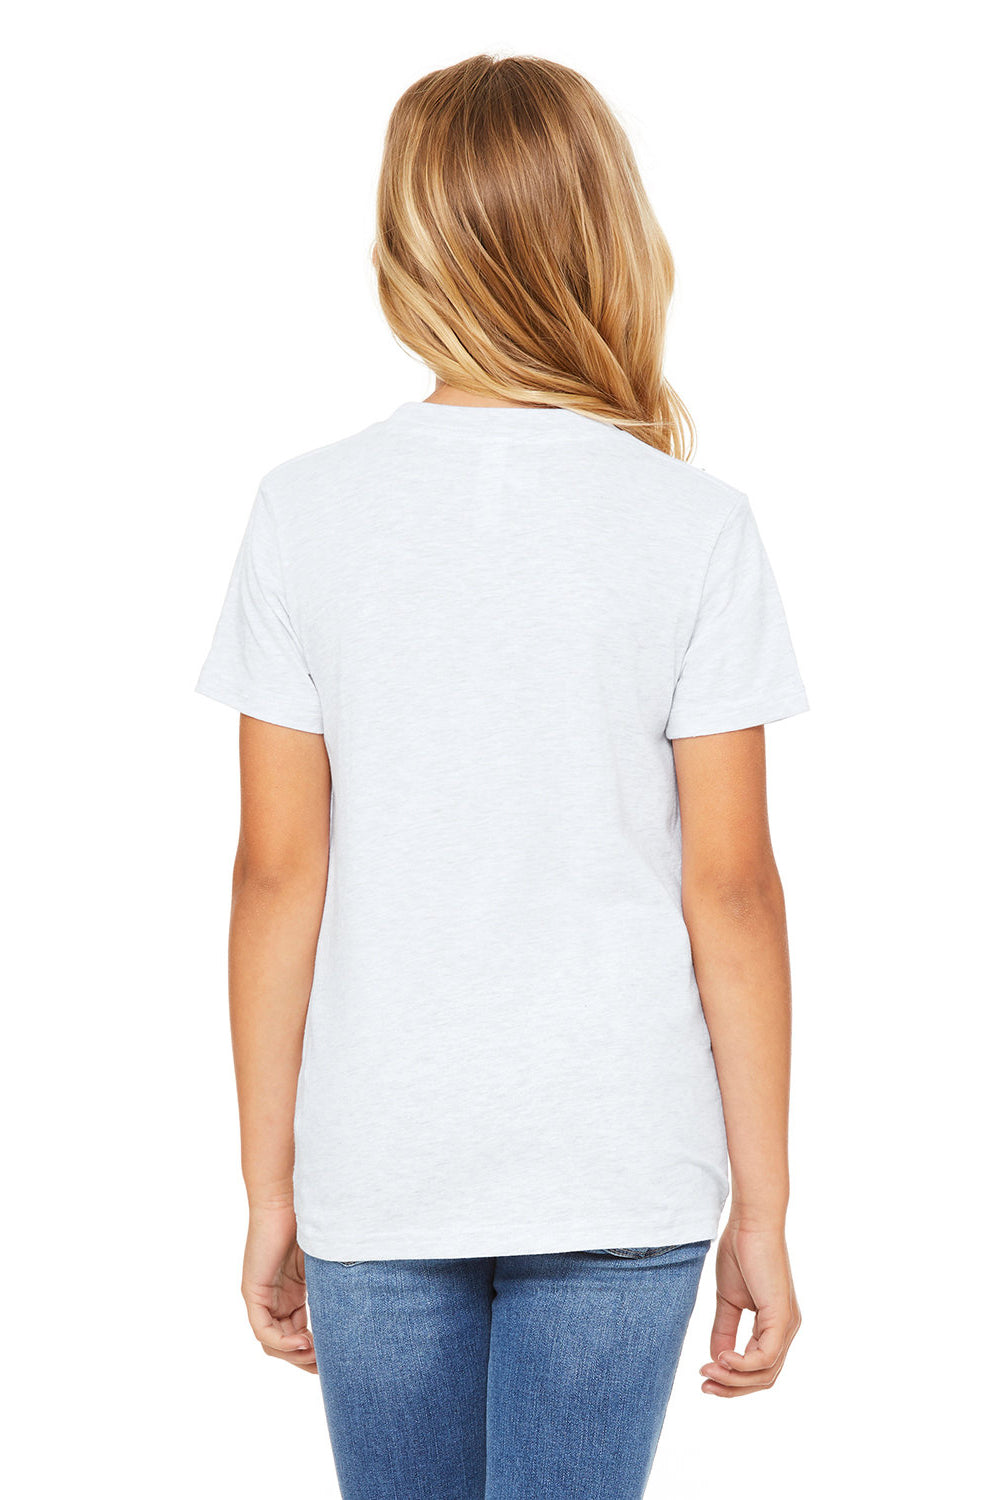 Bella + Canvas 3001Y Youth Jersey Short Sleeve Crewneck T-Shirt Ash Grey Model Back